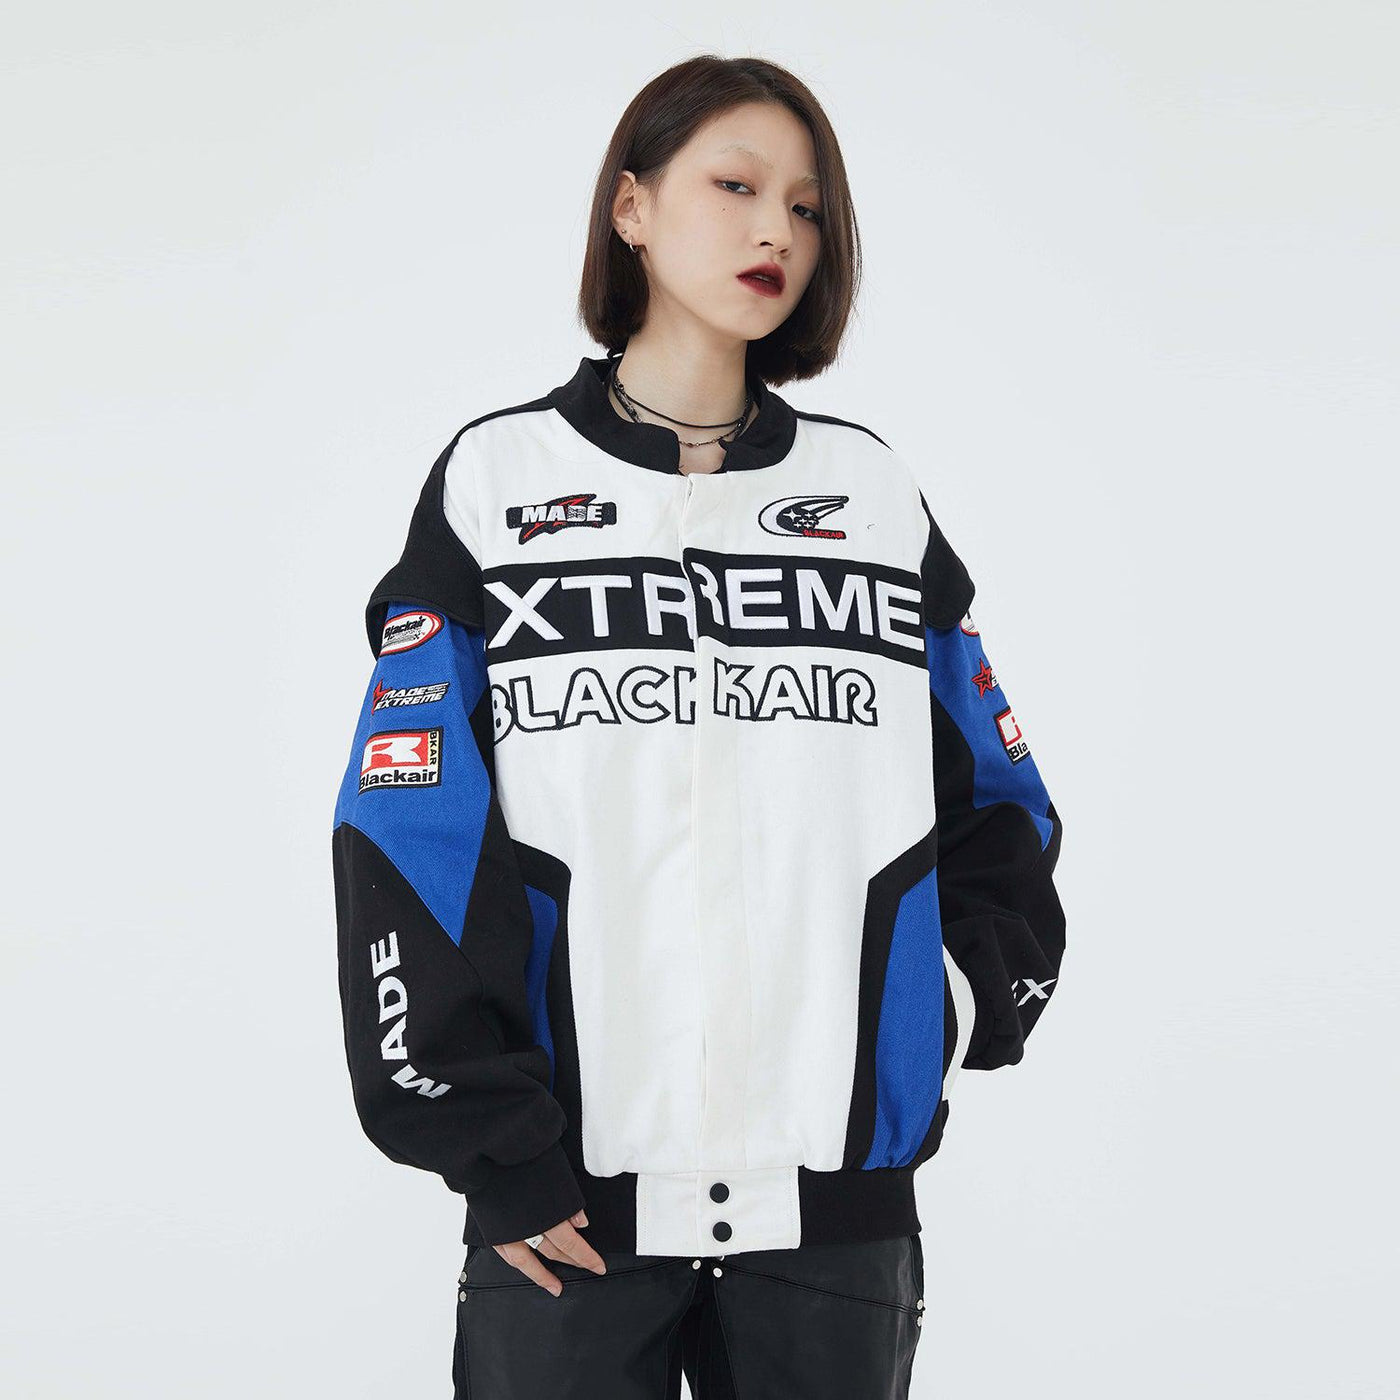 Made Extreme Black Air Motorsport Jacket Korean Street Fashion Jacket By Made Extreme Shop Online at OH Vault